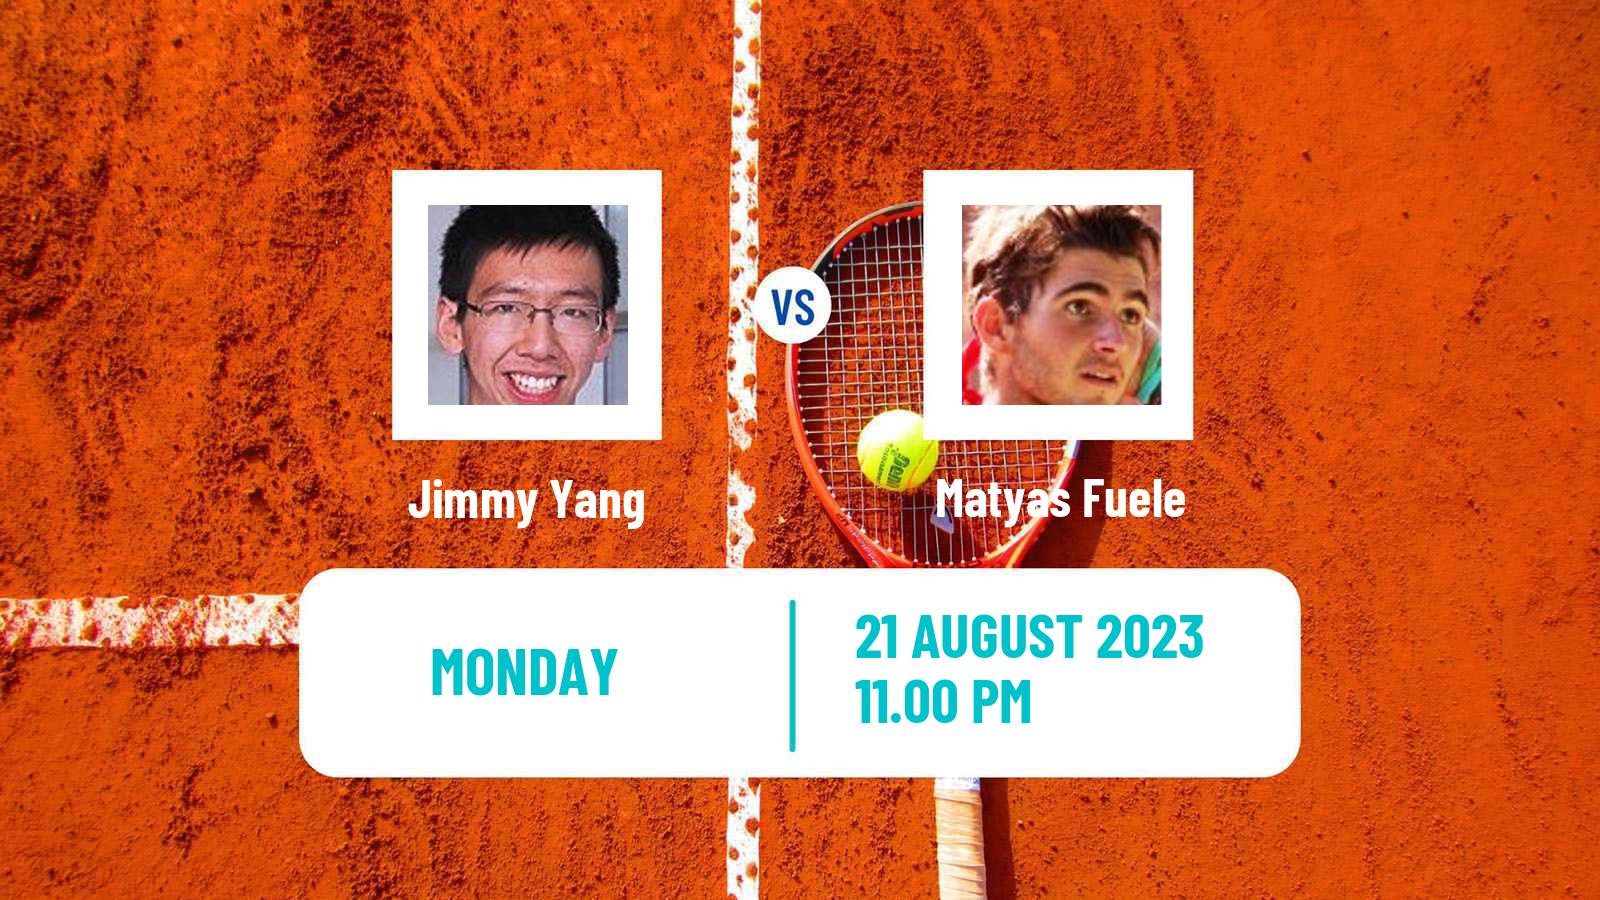 Tennis ITF M25 Tainan 2 Men Jimmy Yang - Matyas Fuele